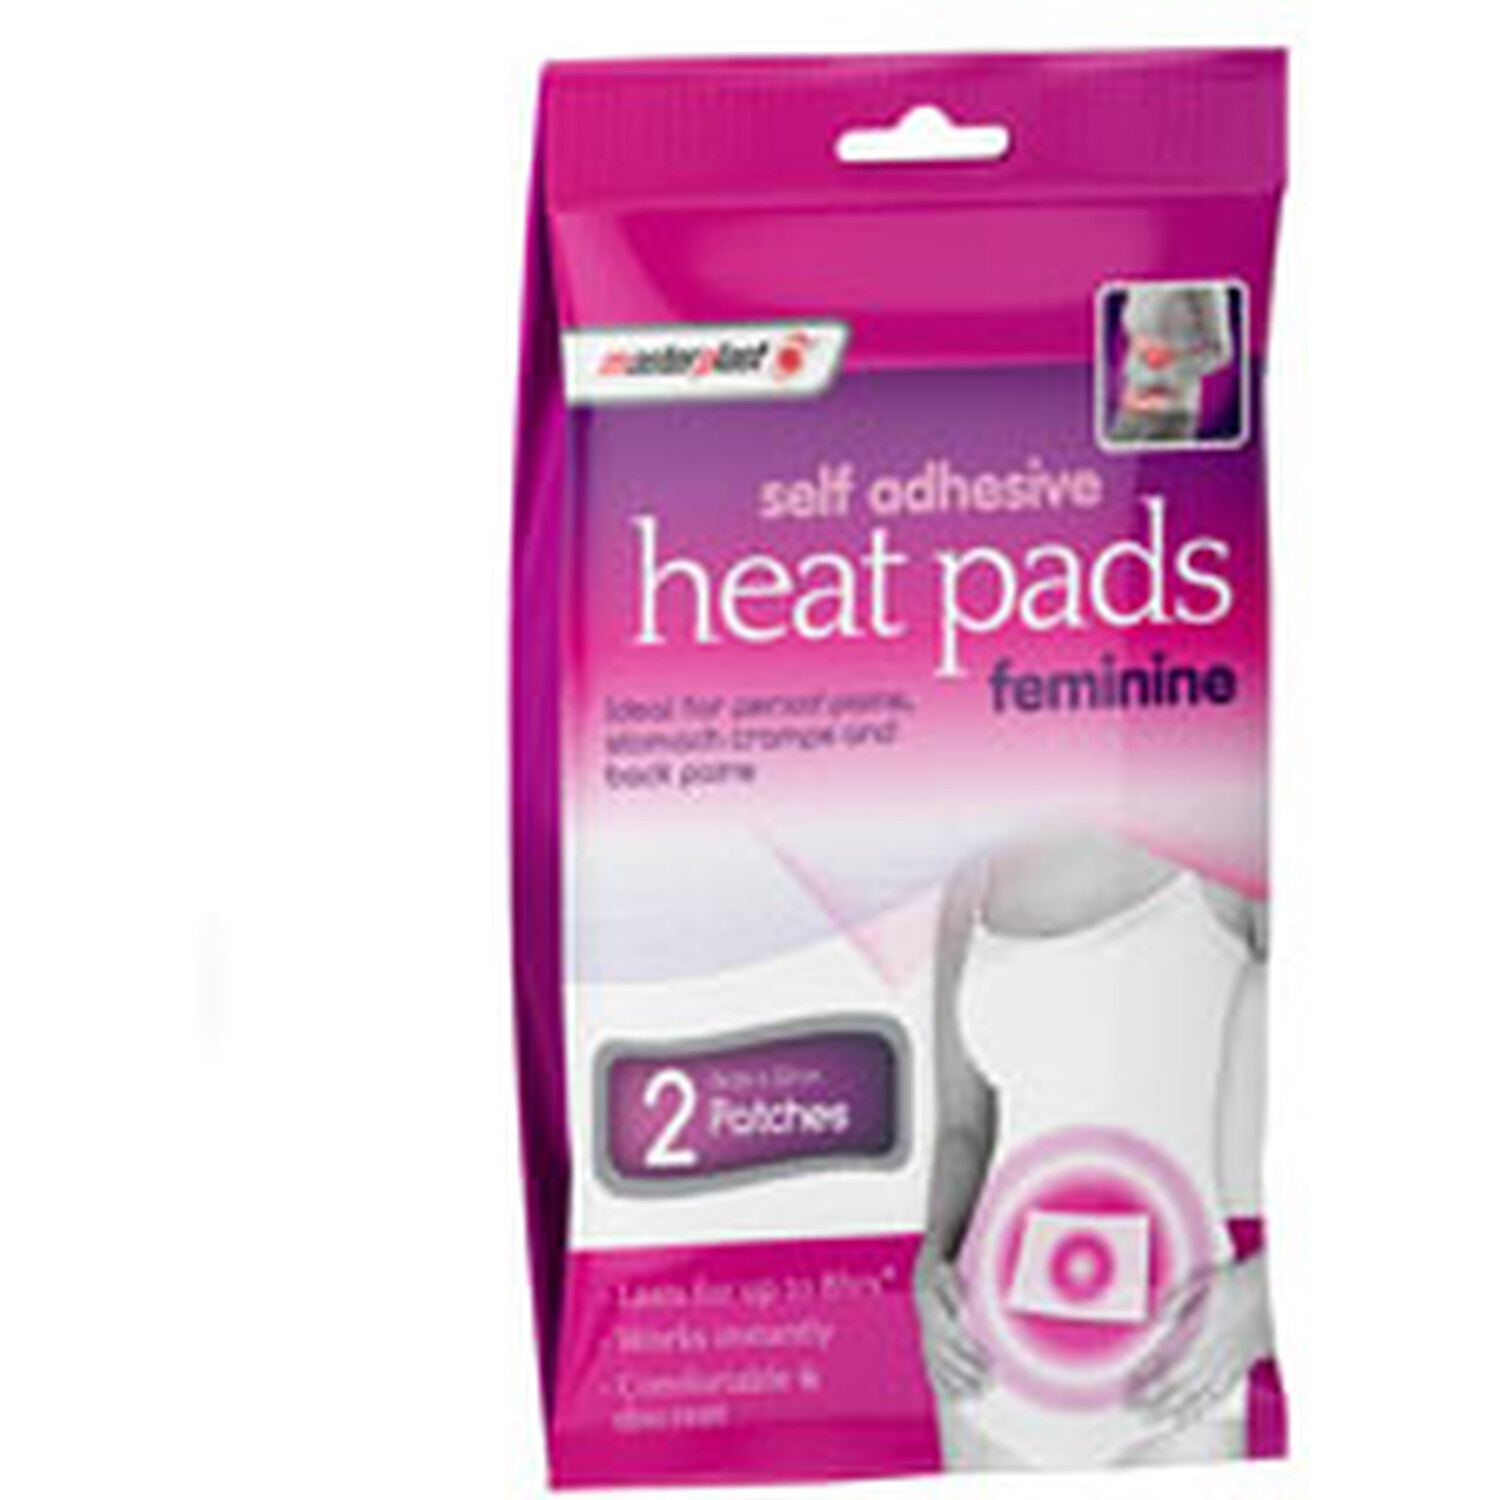 Pack of 2 Self-Adhesive Feminine Heat Pads - Pink Image